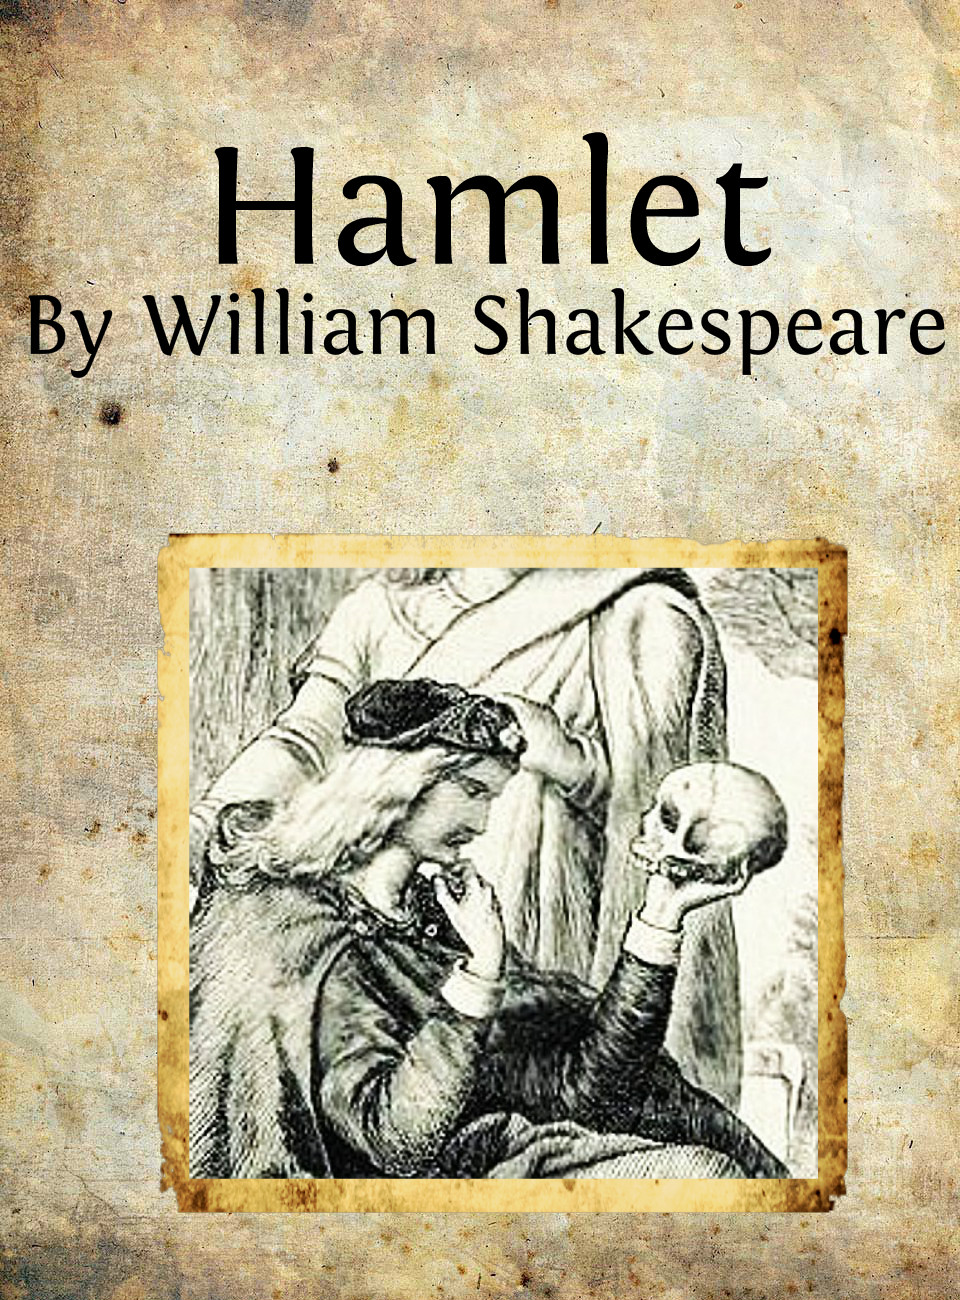 The Era Of Hamlet